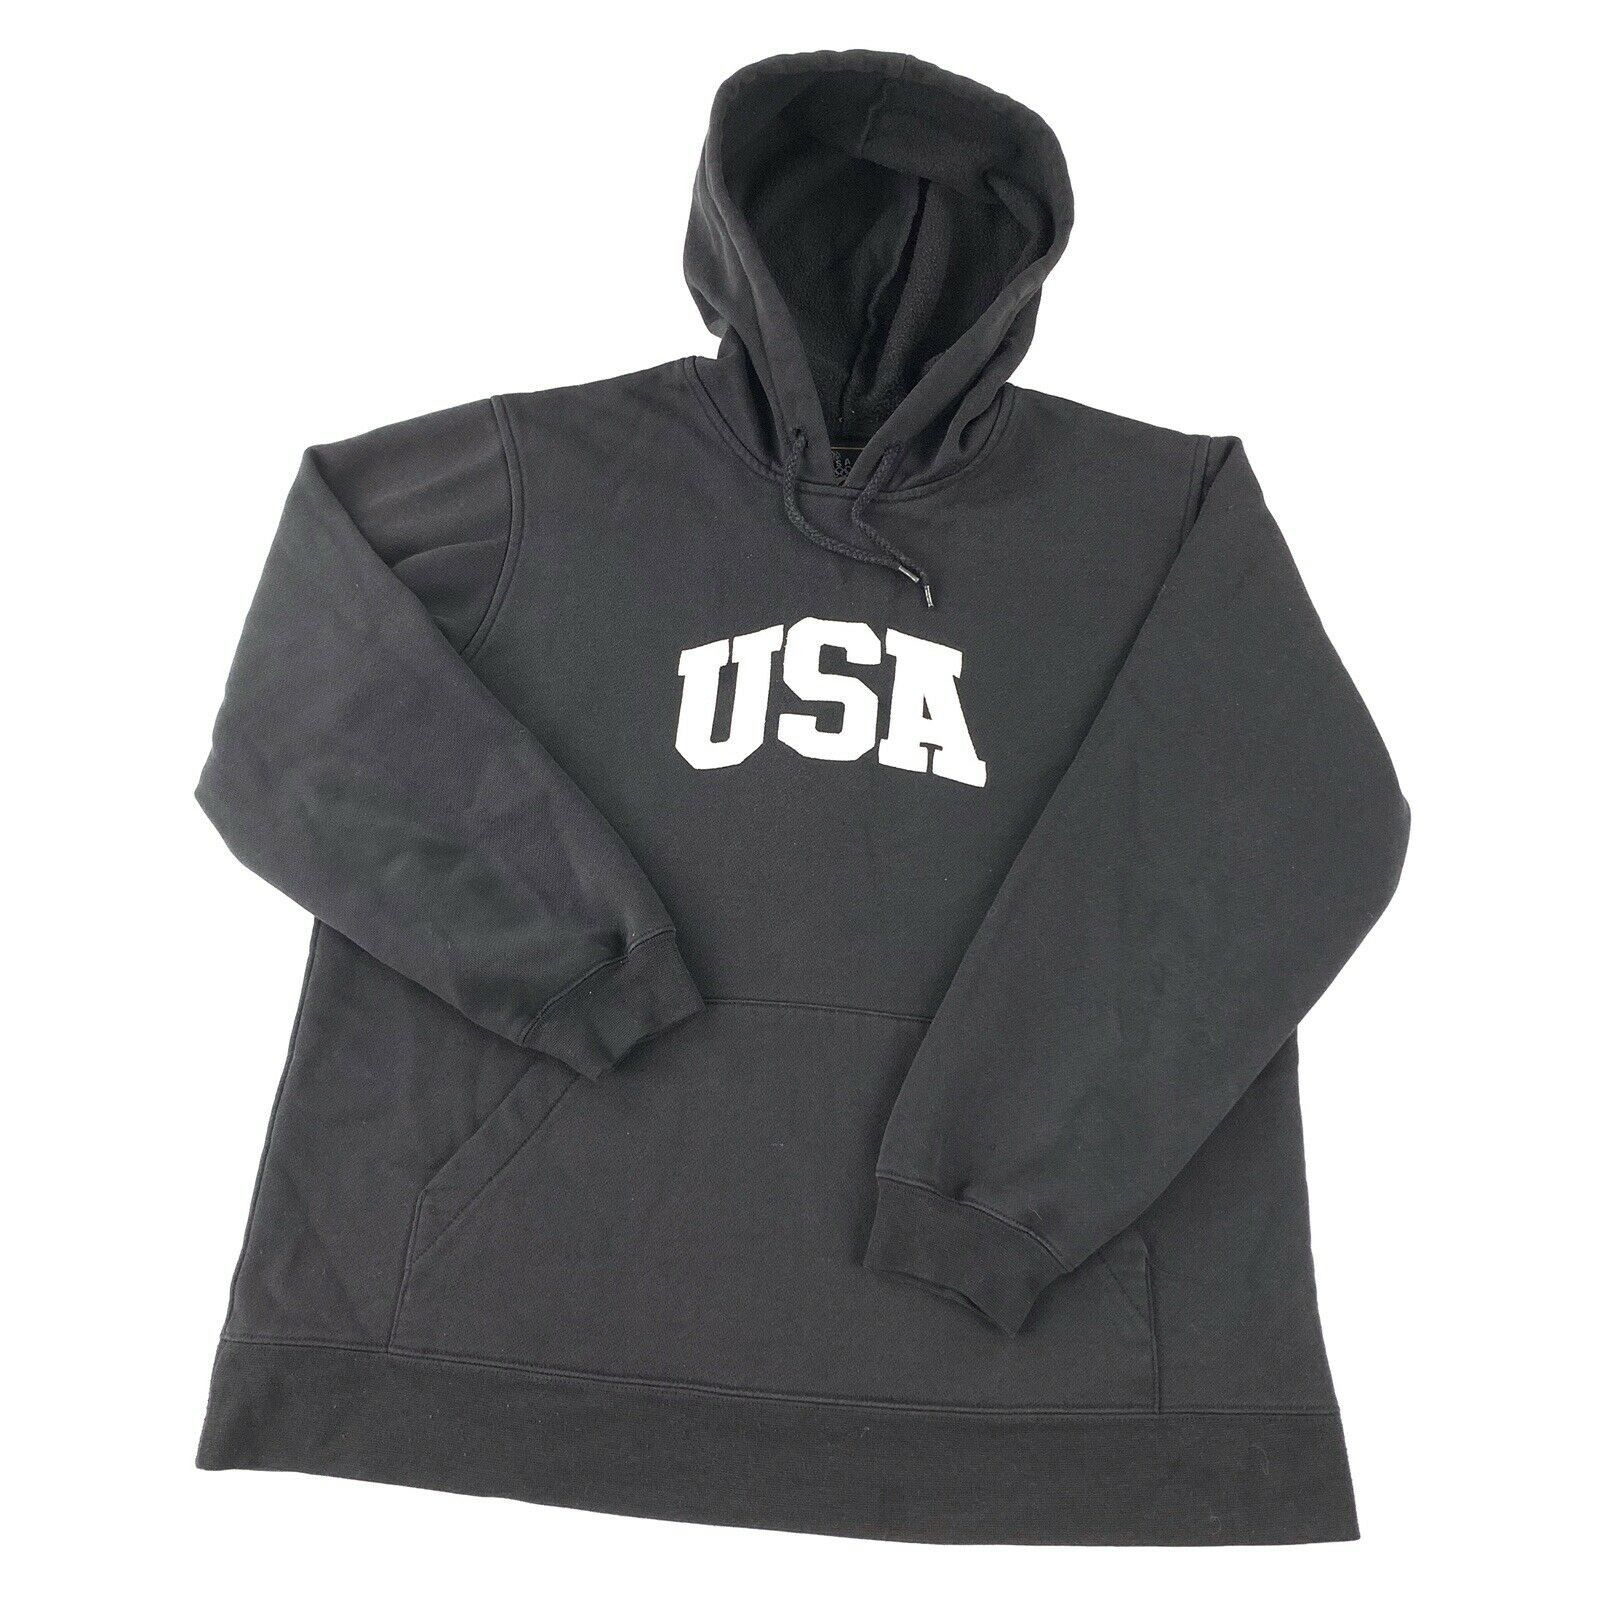 Vintage Vintage 90s Small Olympic USA Spellout Hoodie Sweatshirt Black ...